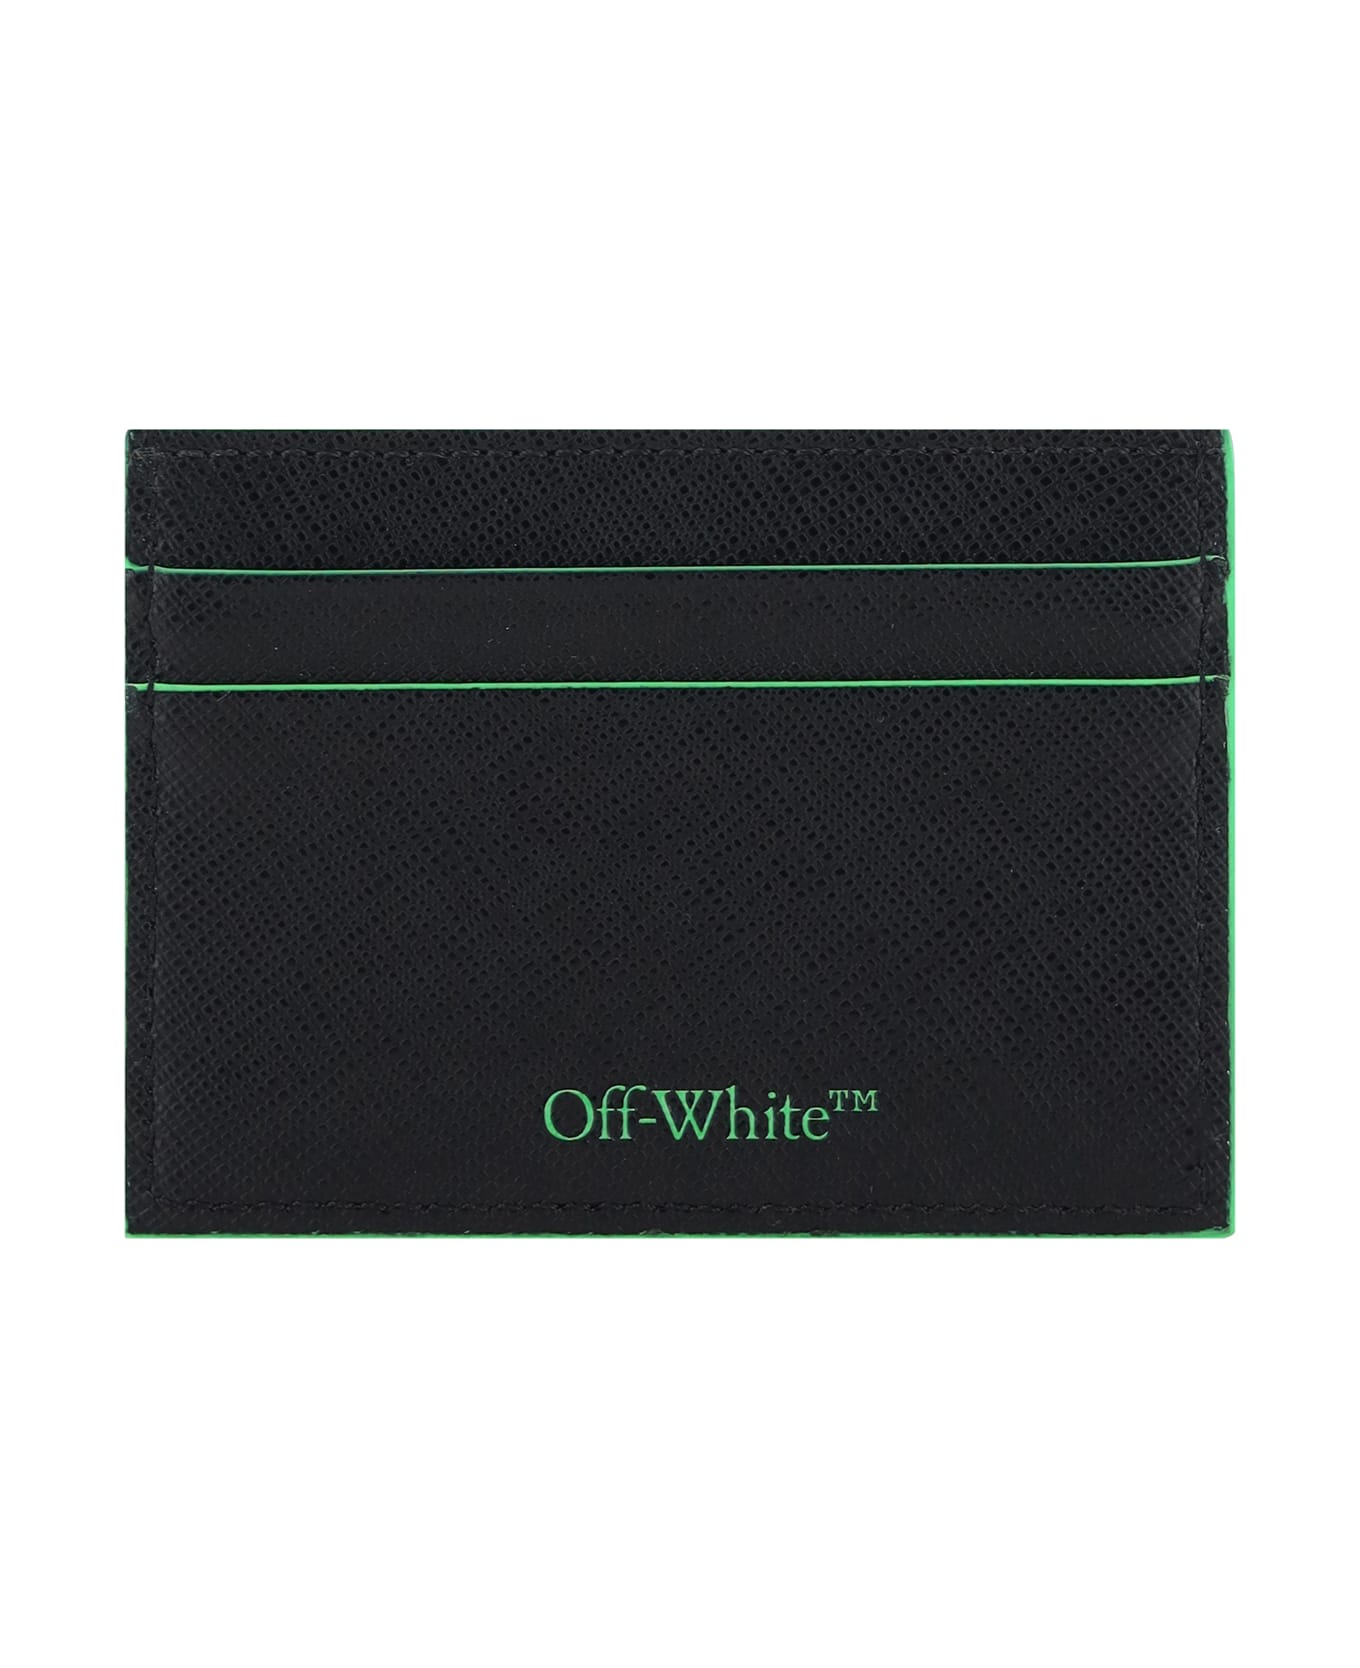 Off-White Card Holder - Black Green Fluo 財布